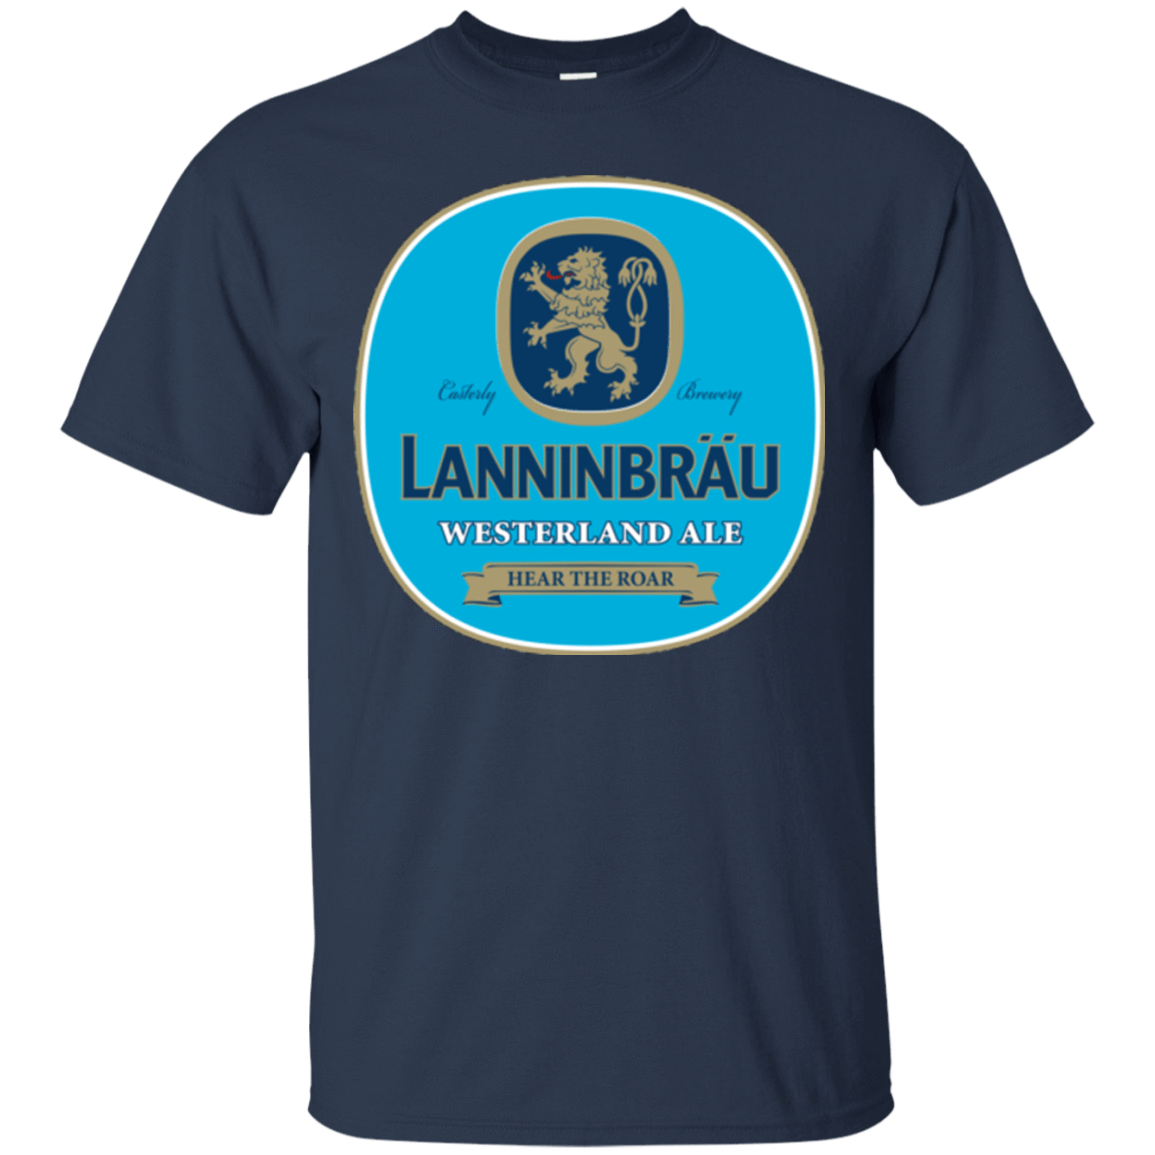 T-Shirts Navy / Small Lanninbrau T-Shirt